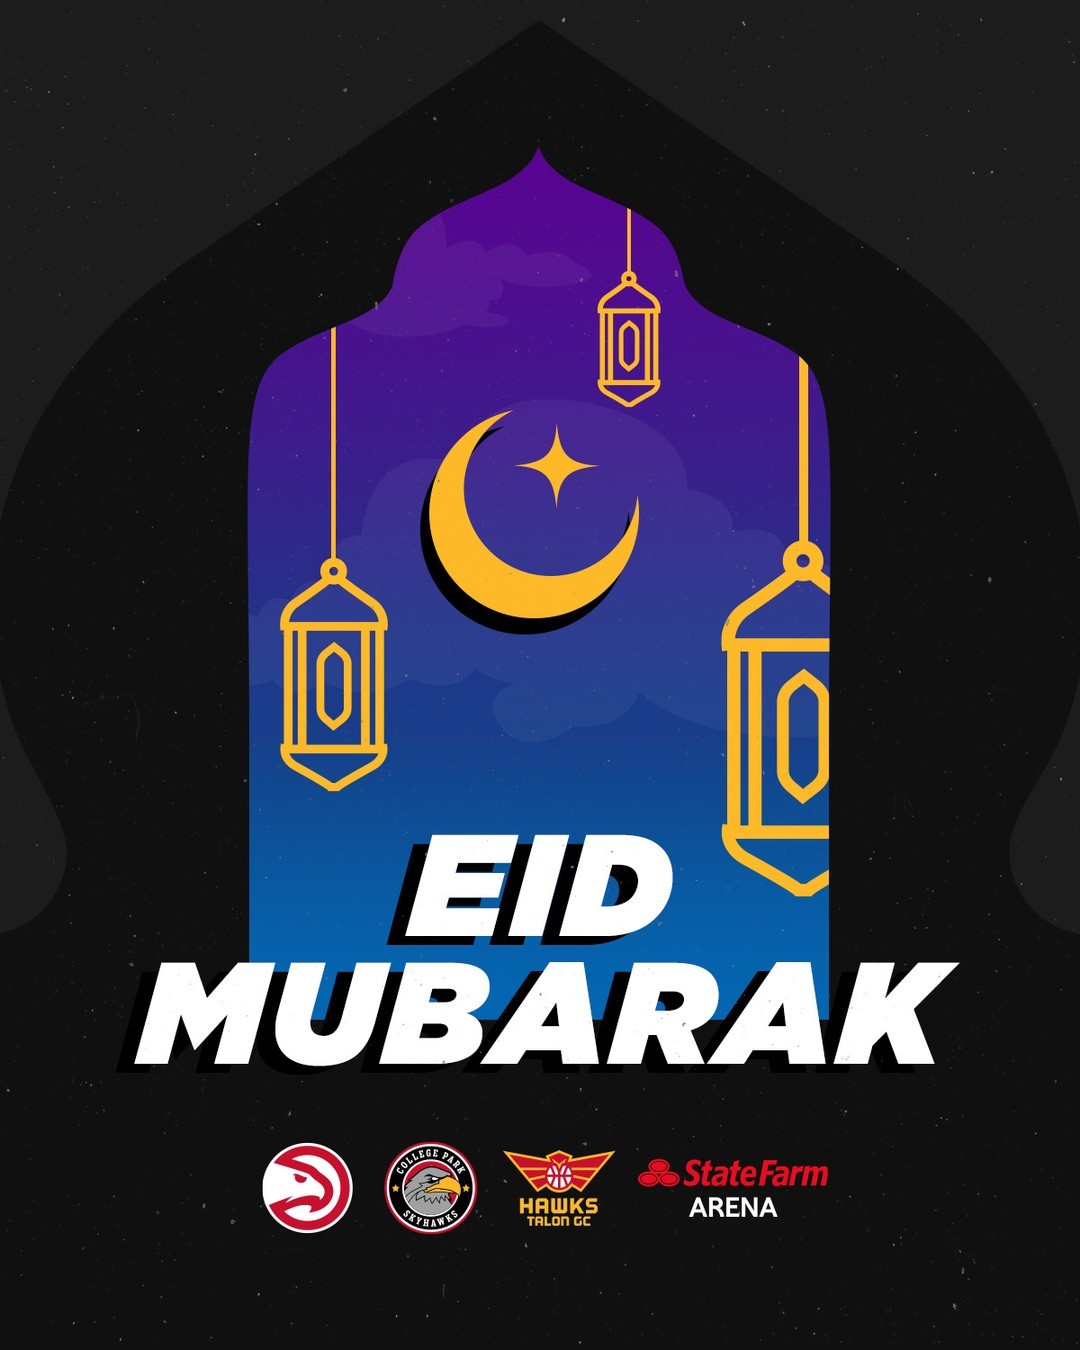 Eid Mubarak to our Hawks family! ...